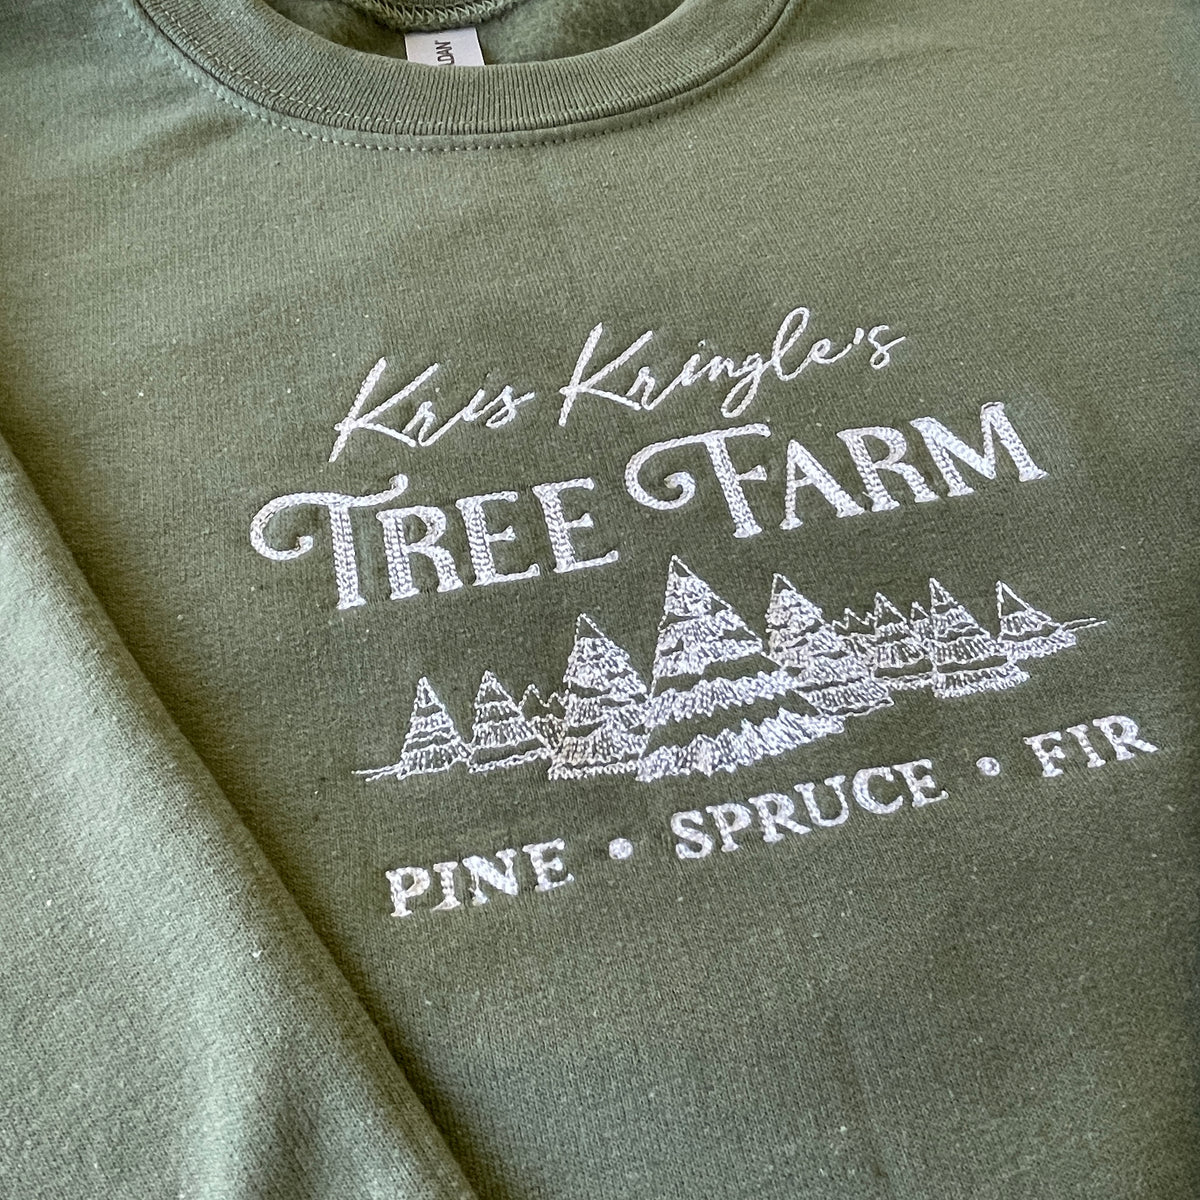 Kris Kringle's Tree Farm